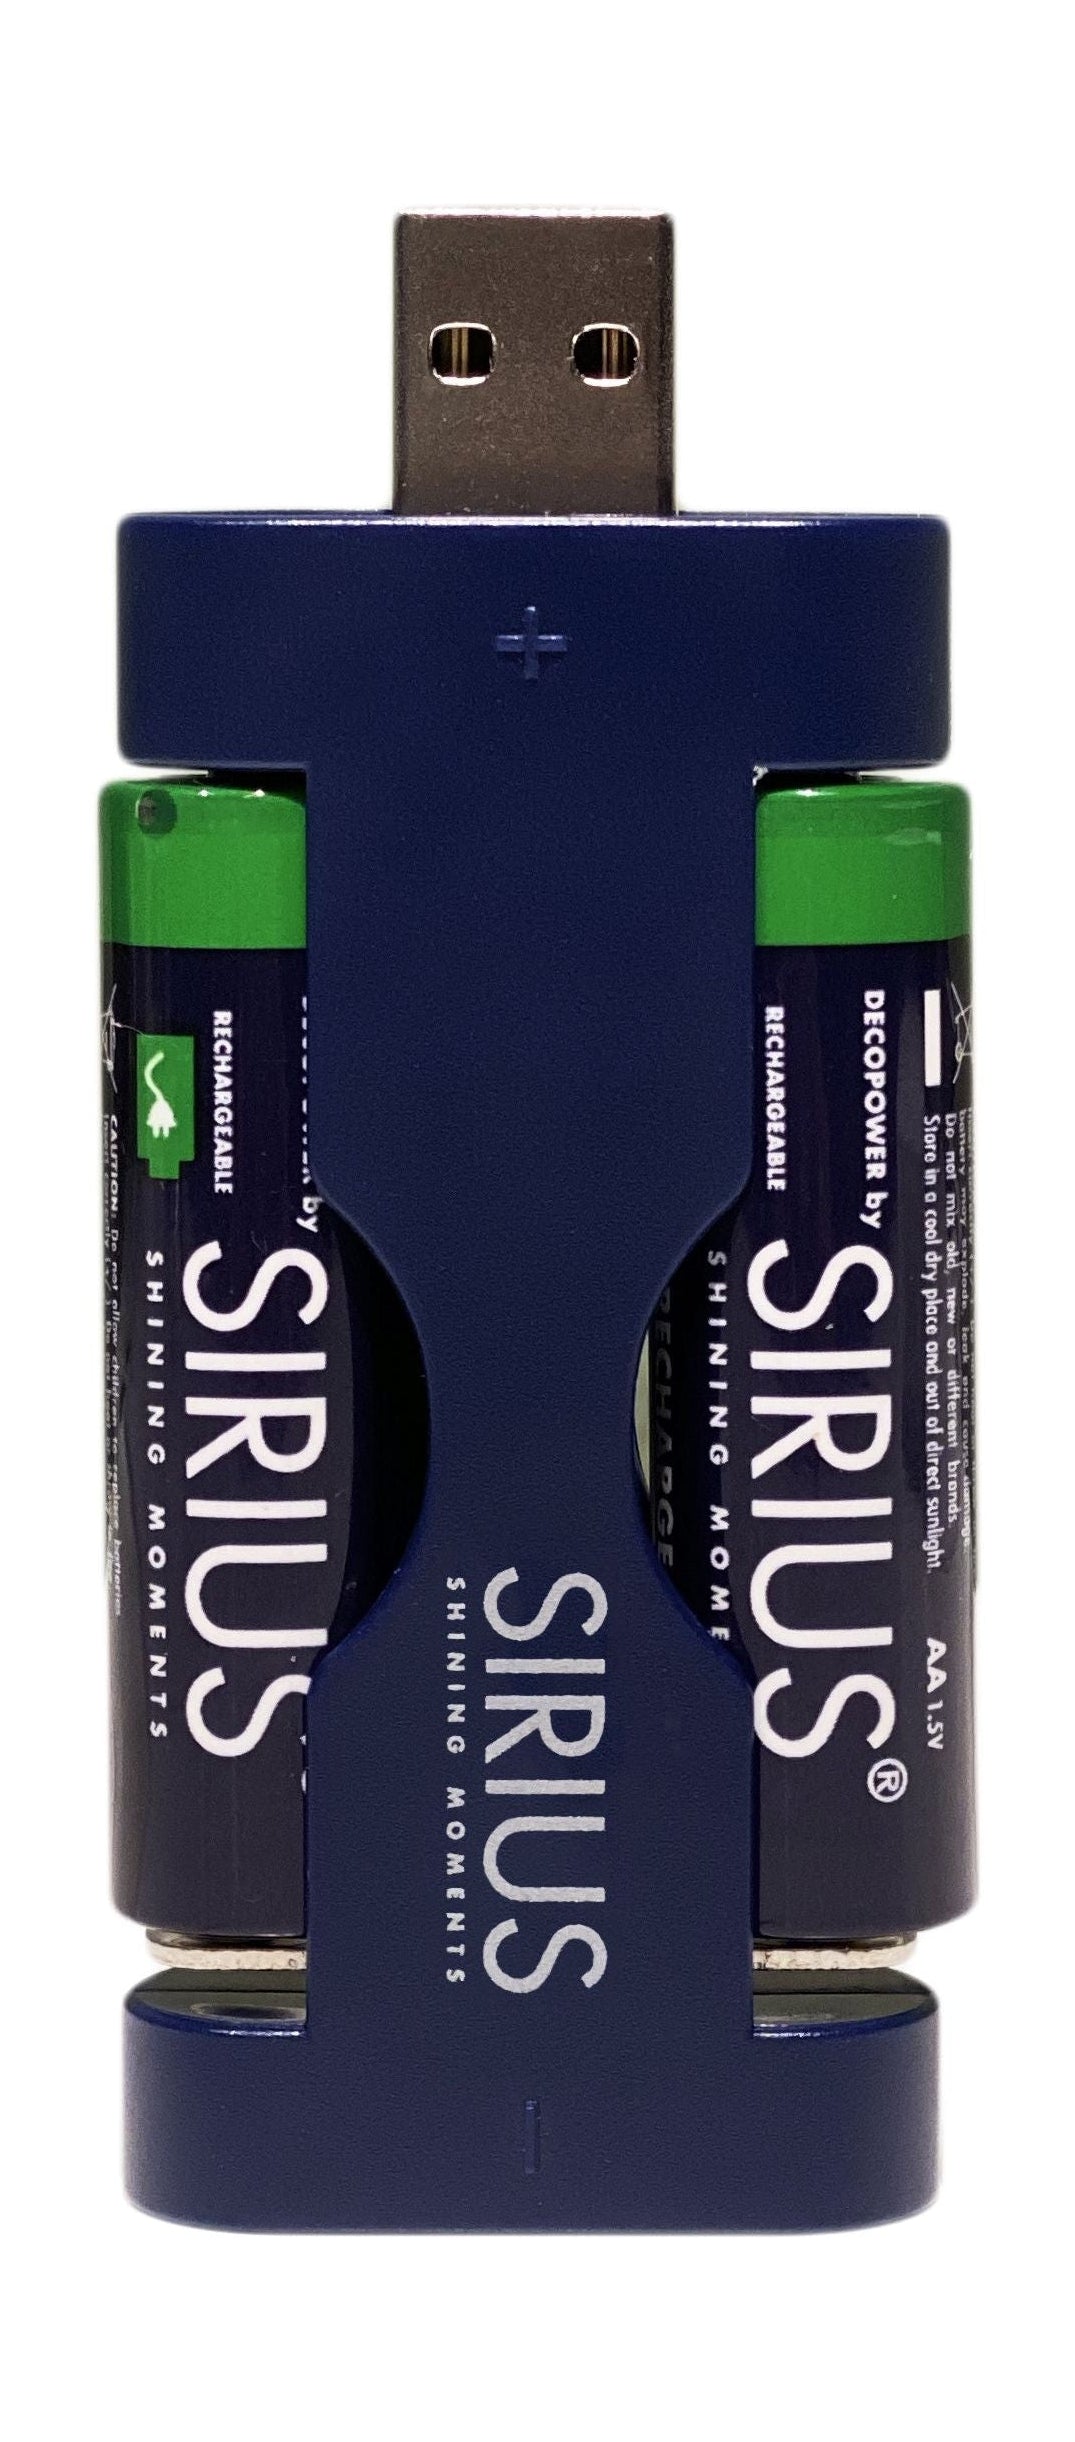 Caricatore USB di Sirius Deco Power incl. 4x batterie ricaricabili